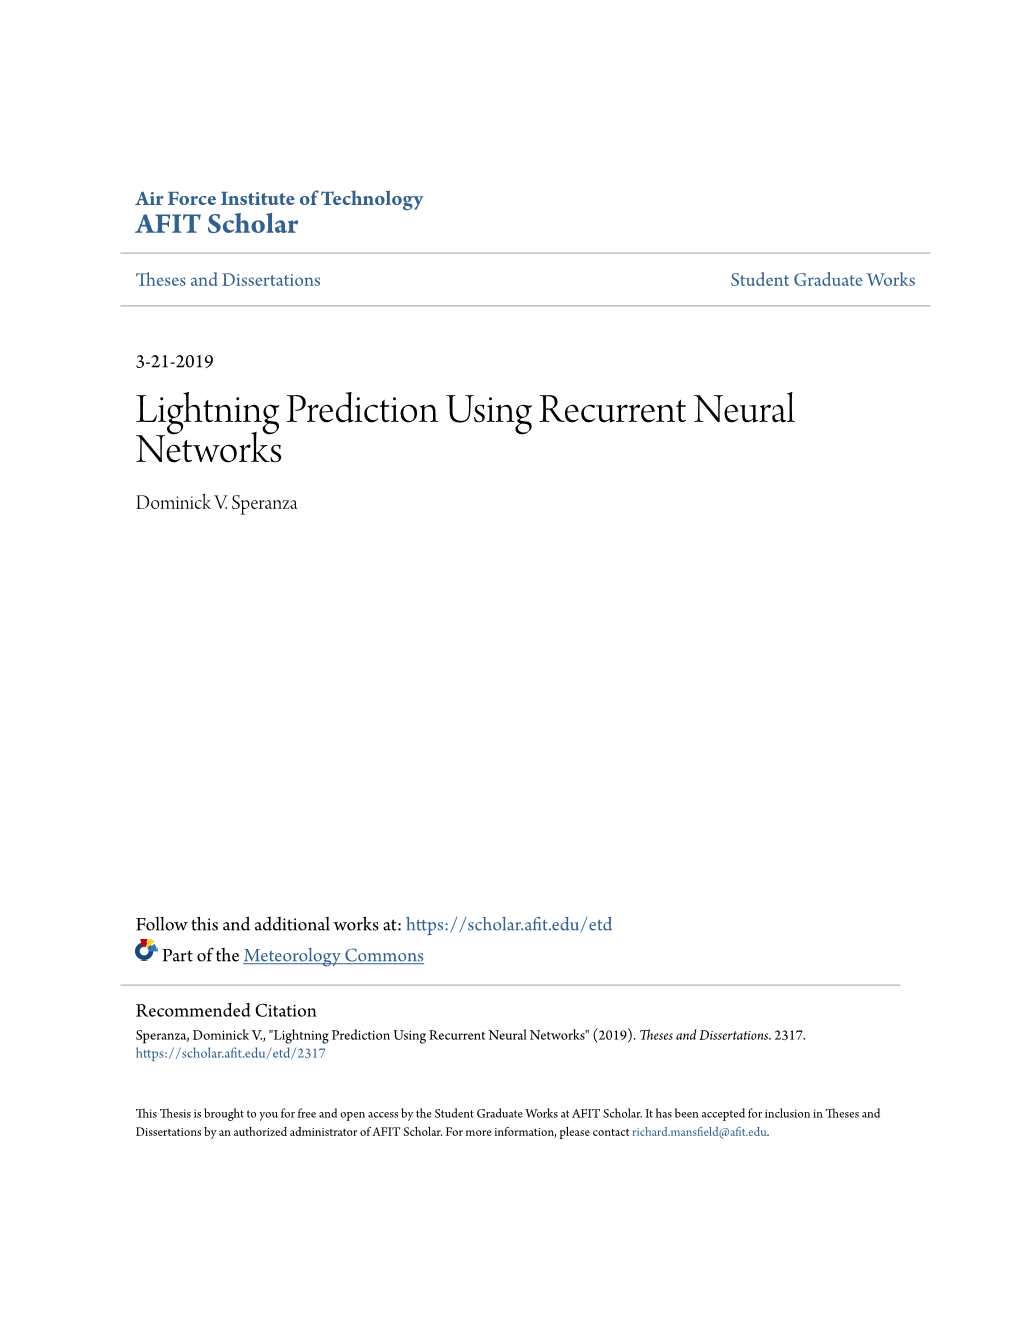 Lightning Prediction Using Recurrent Neural Networks Dominick V